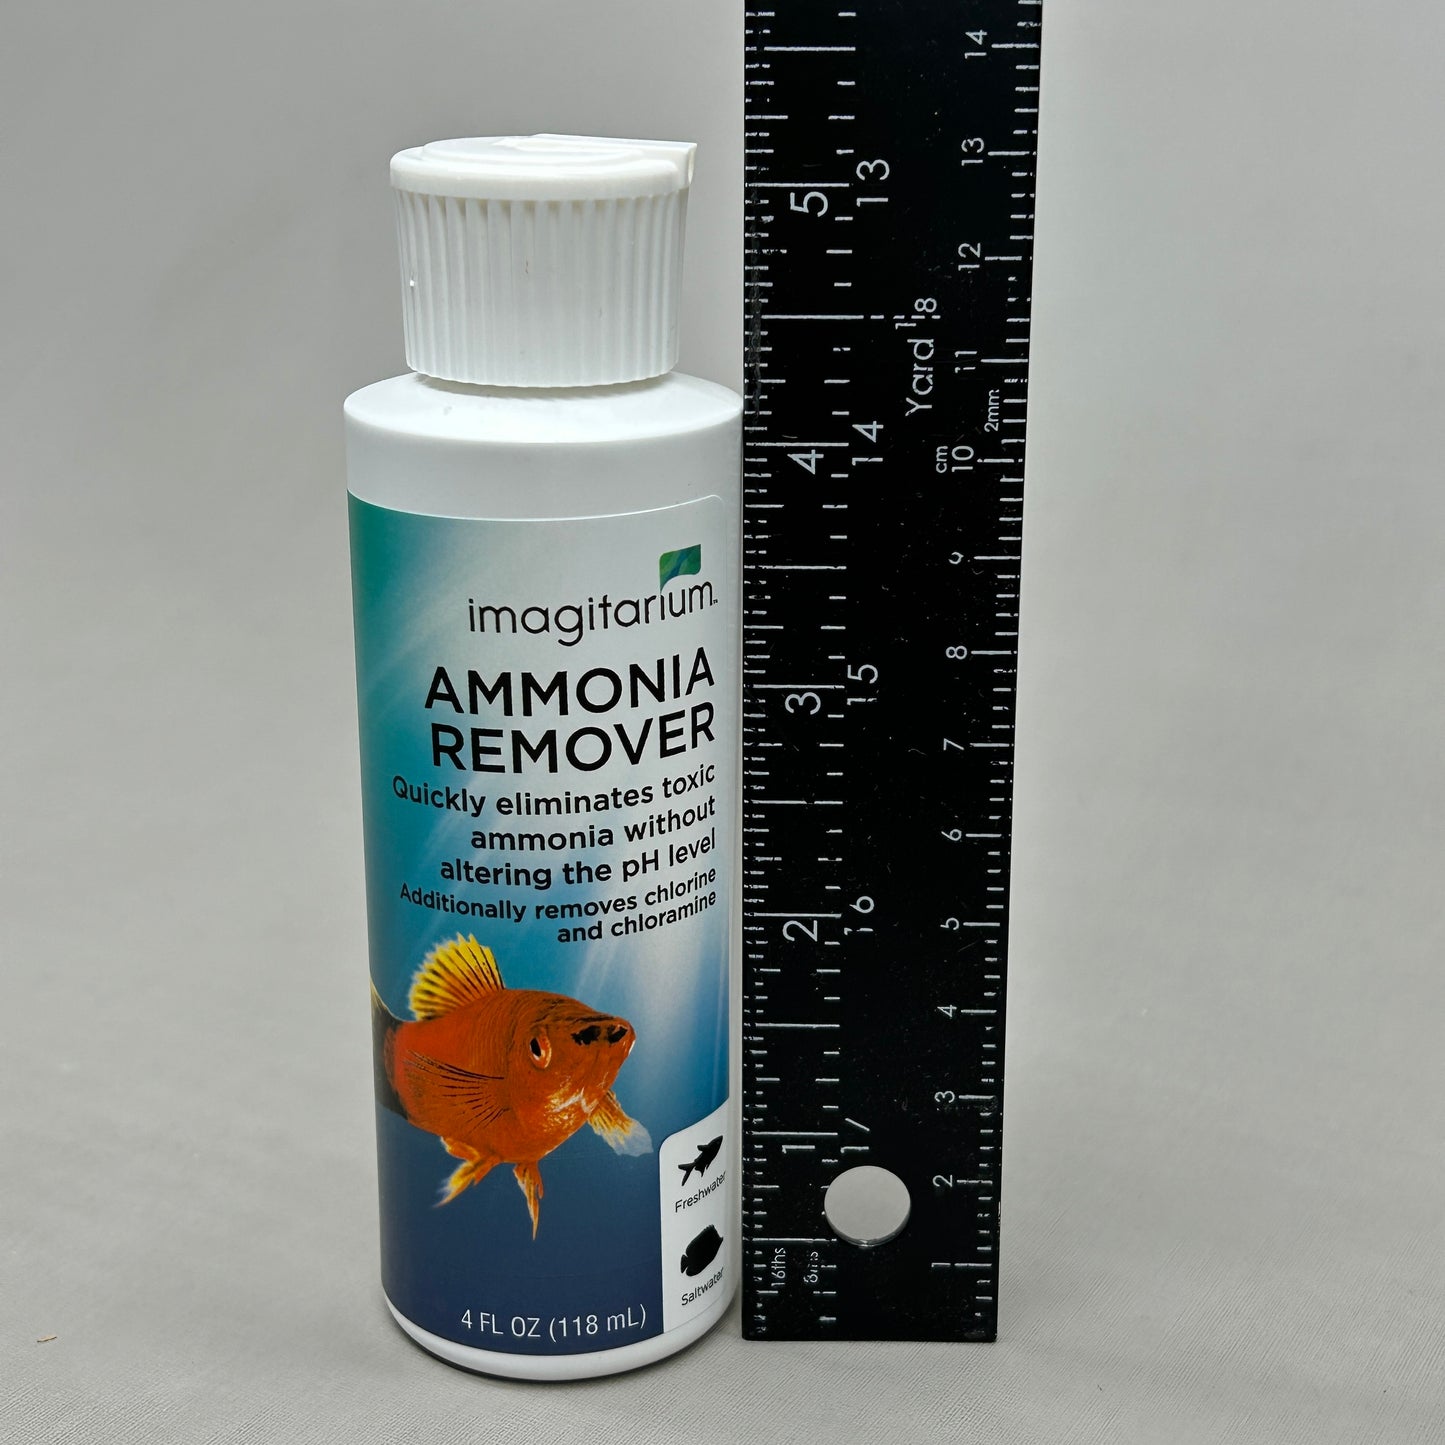 IMAGITARIUM Ammonia Remover Freshwater and Saltwater 4 fl oz 6/25 (New)